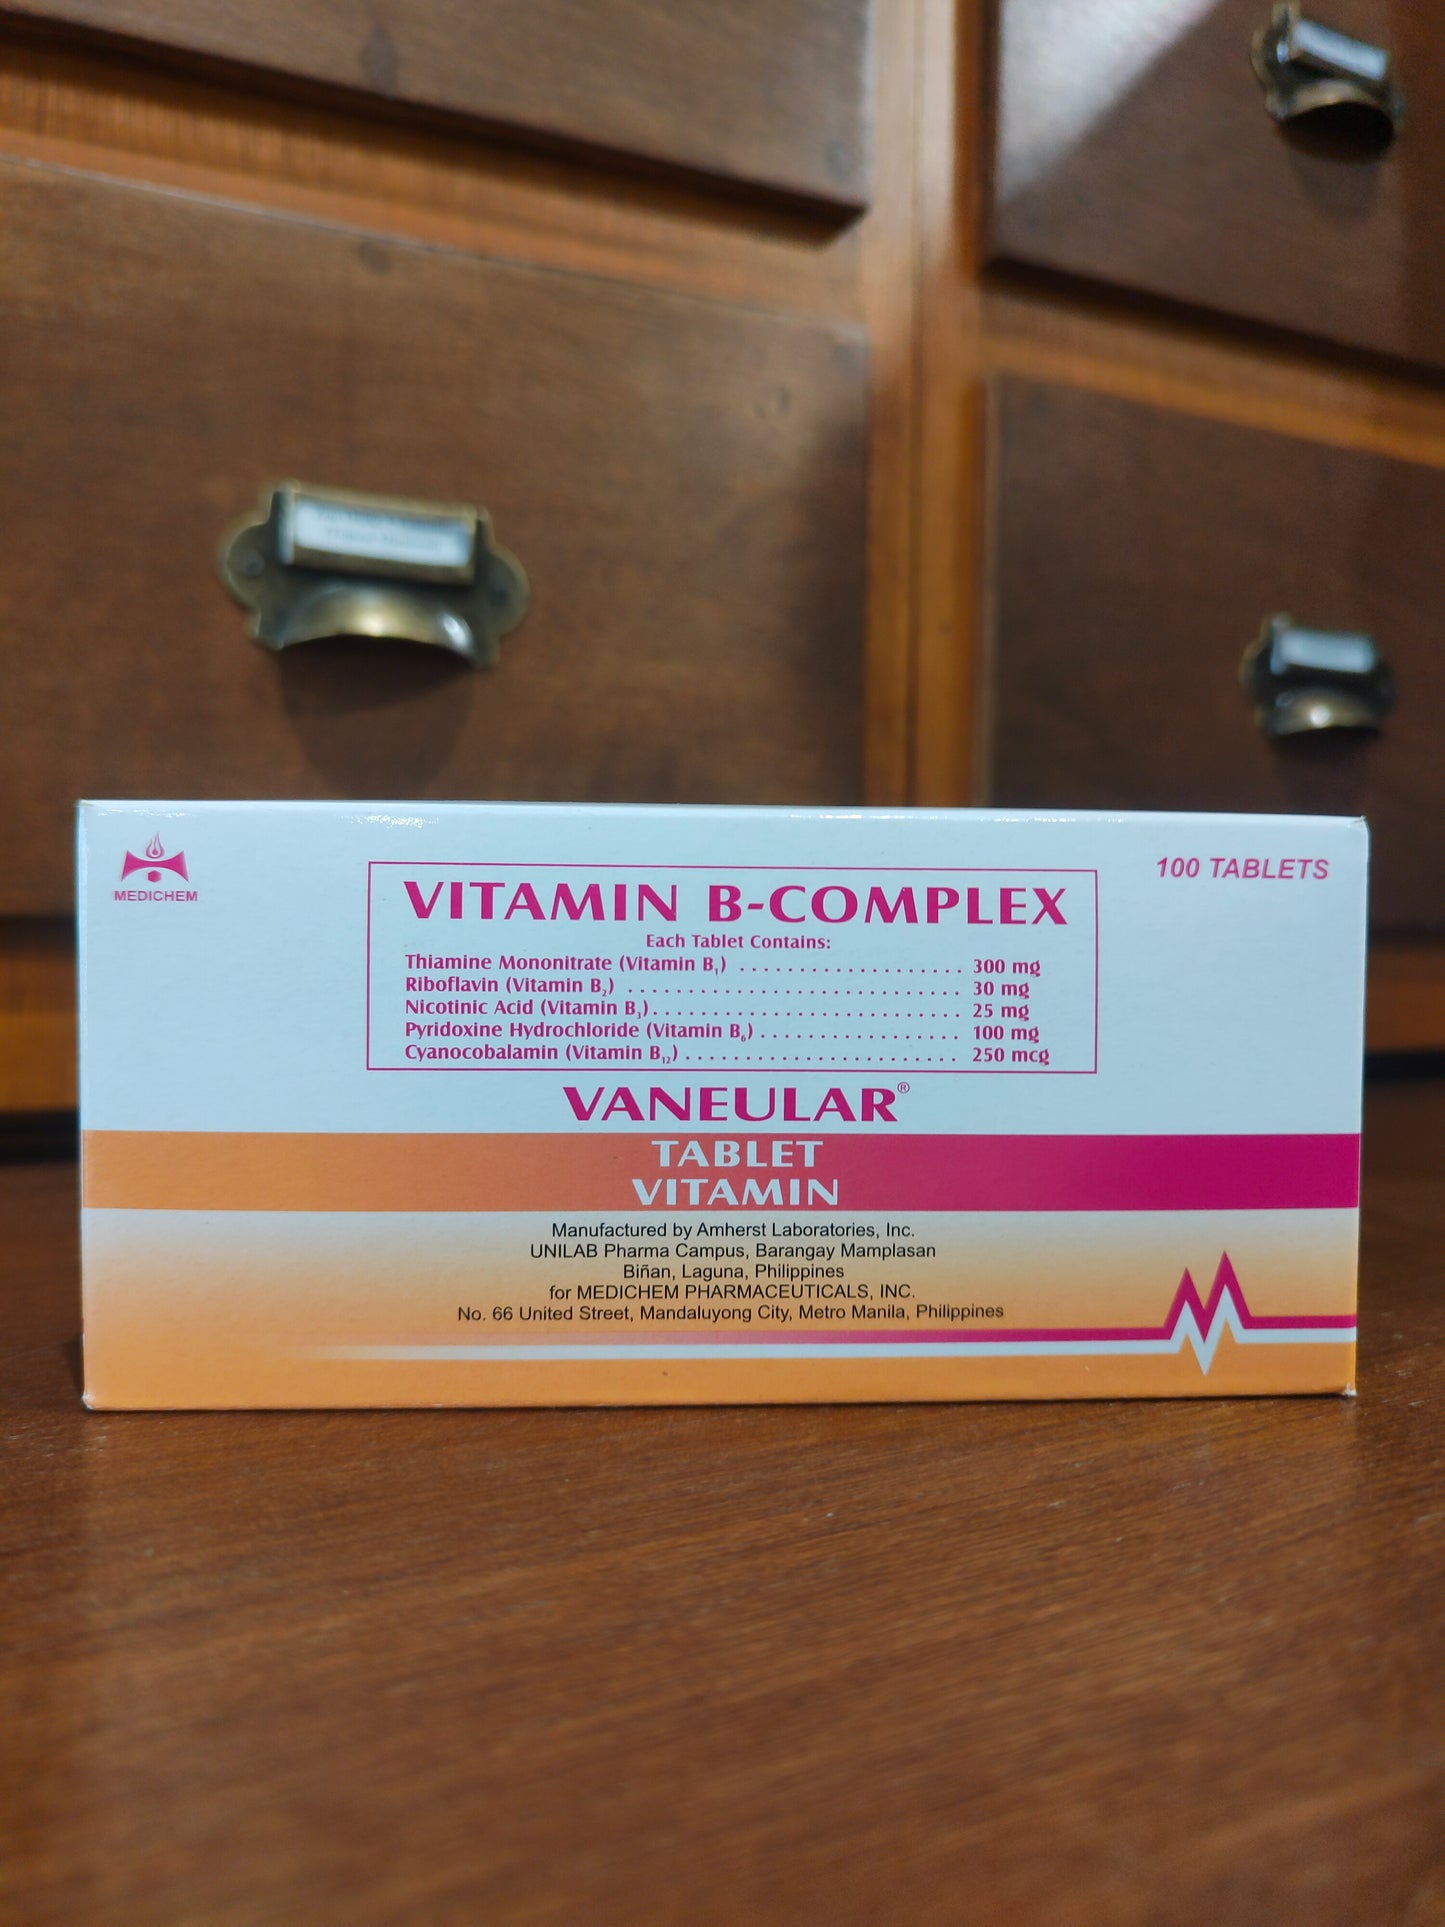 Vitamin B-Complex 300mg/ 30mg/ 25mg/ 100mg/ 250mcg Tablet (Vaneular)